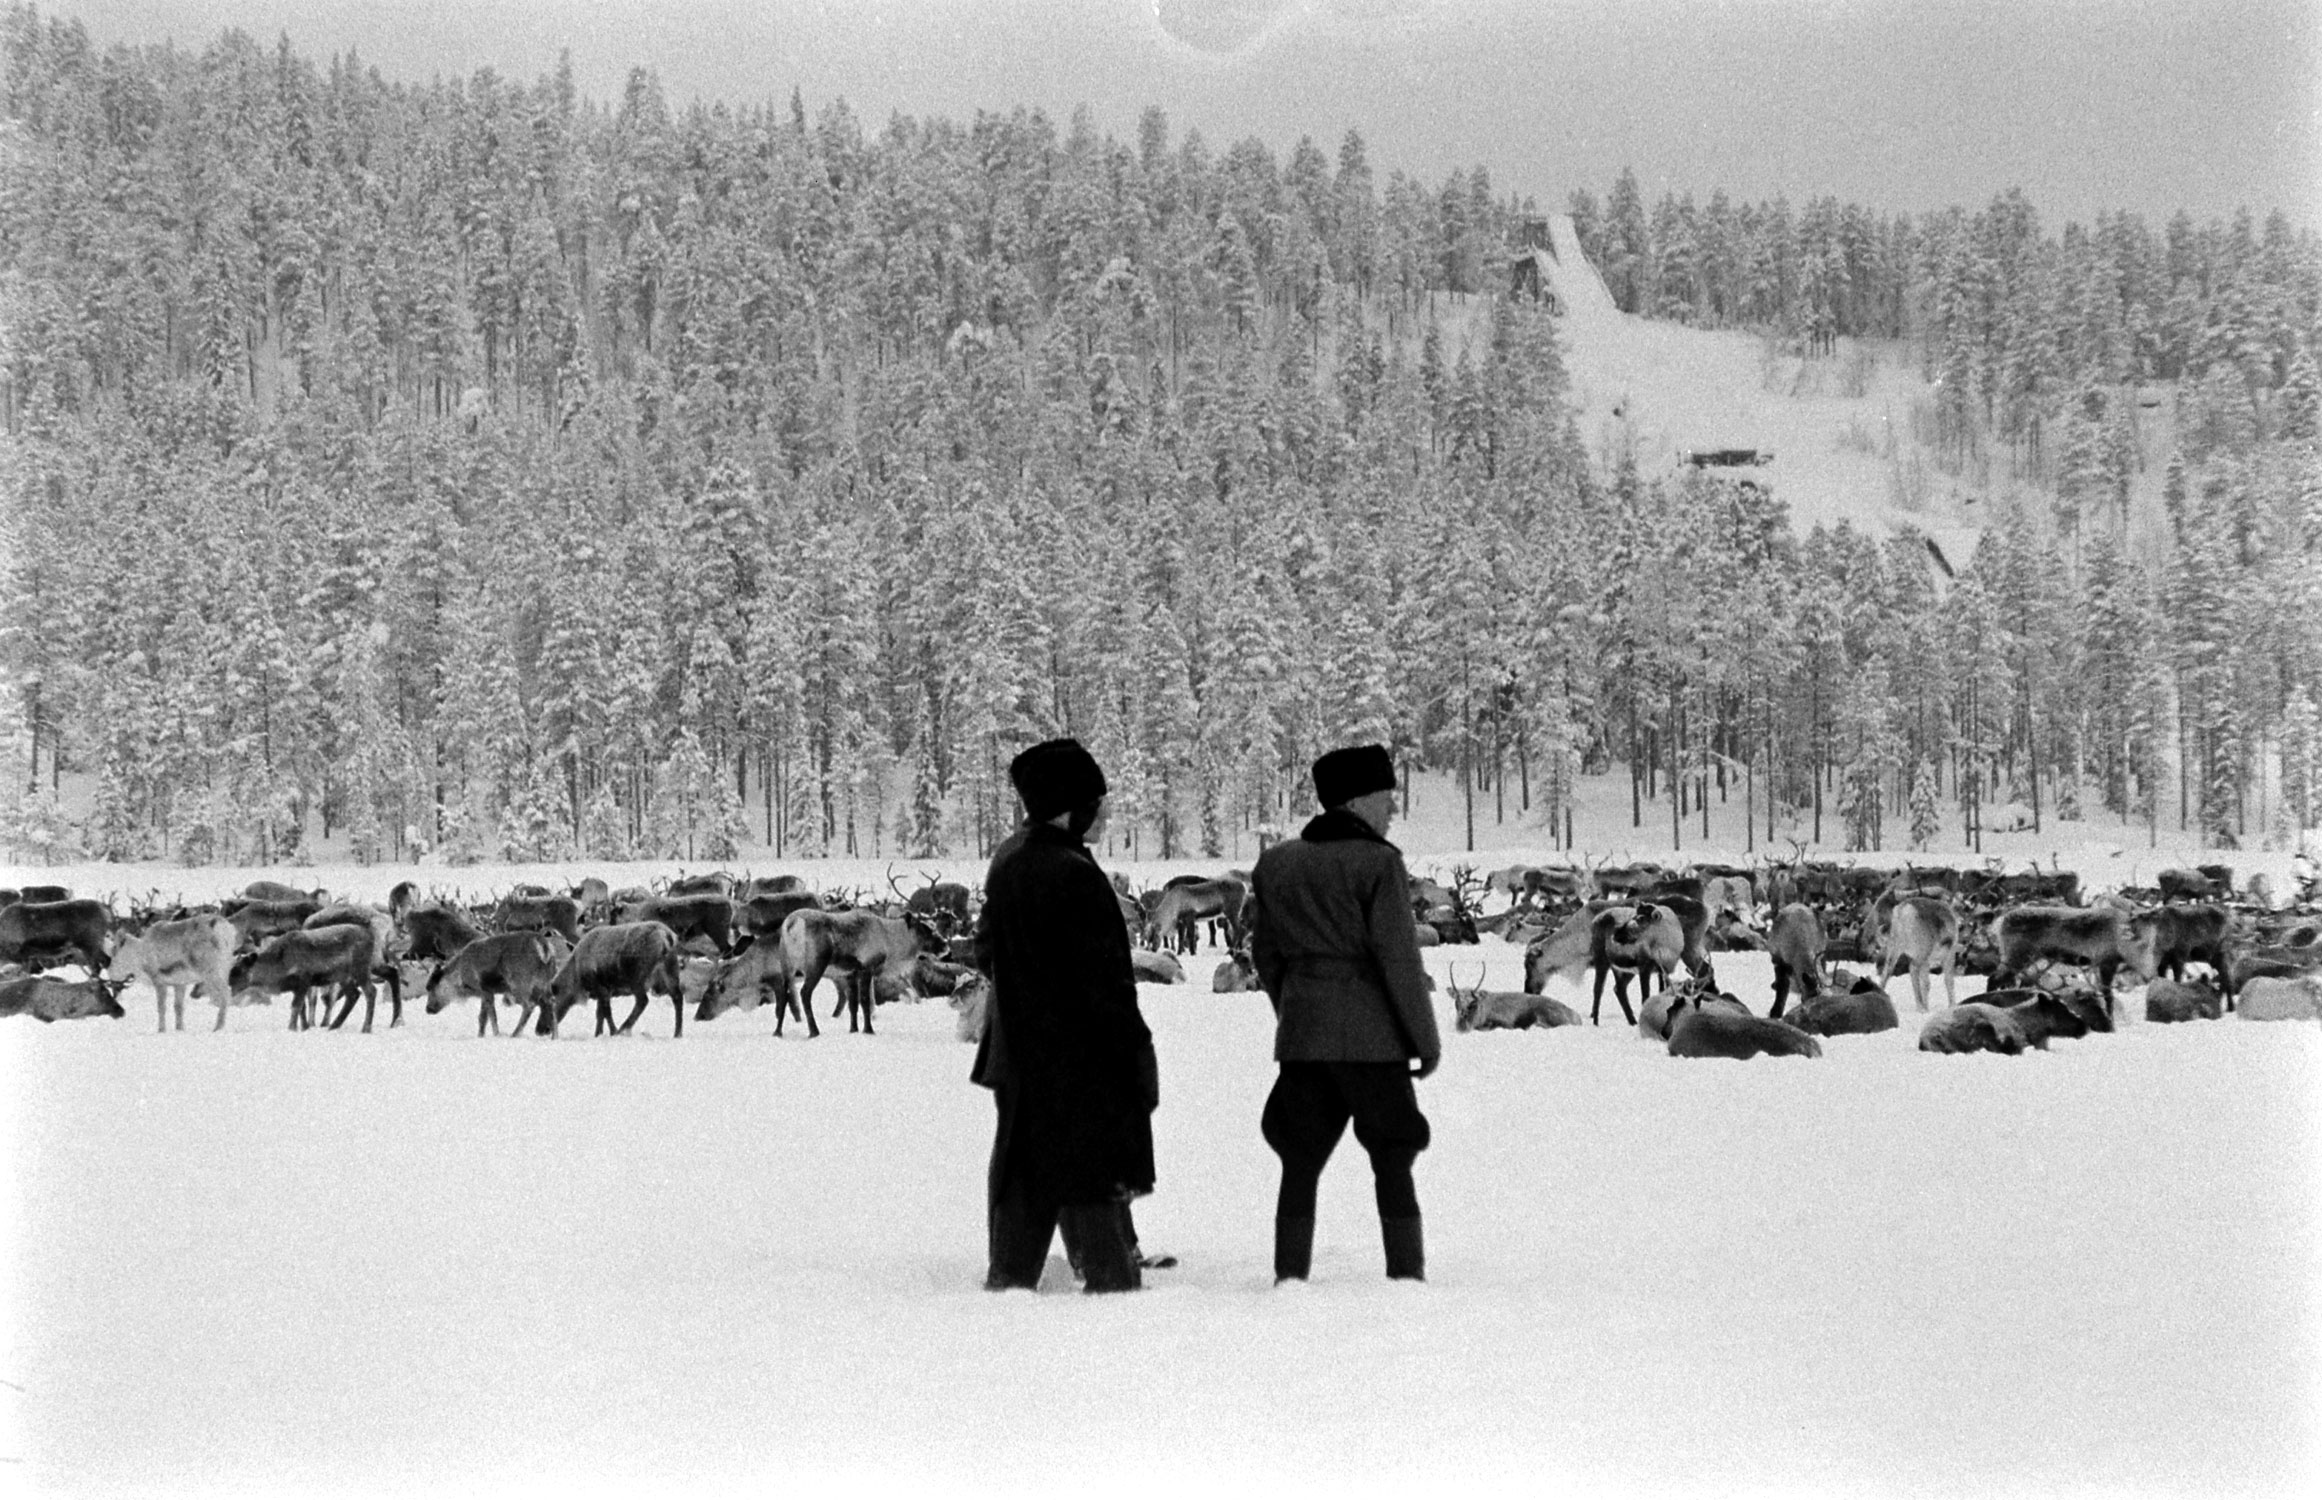 Sami and their reindeer, Sweden, 1955.